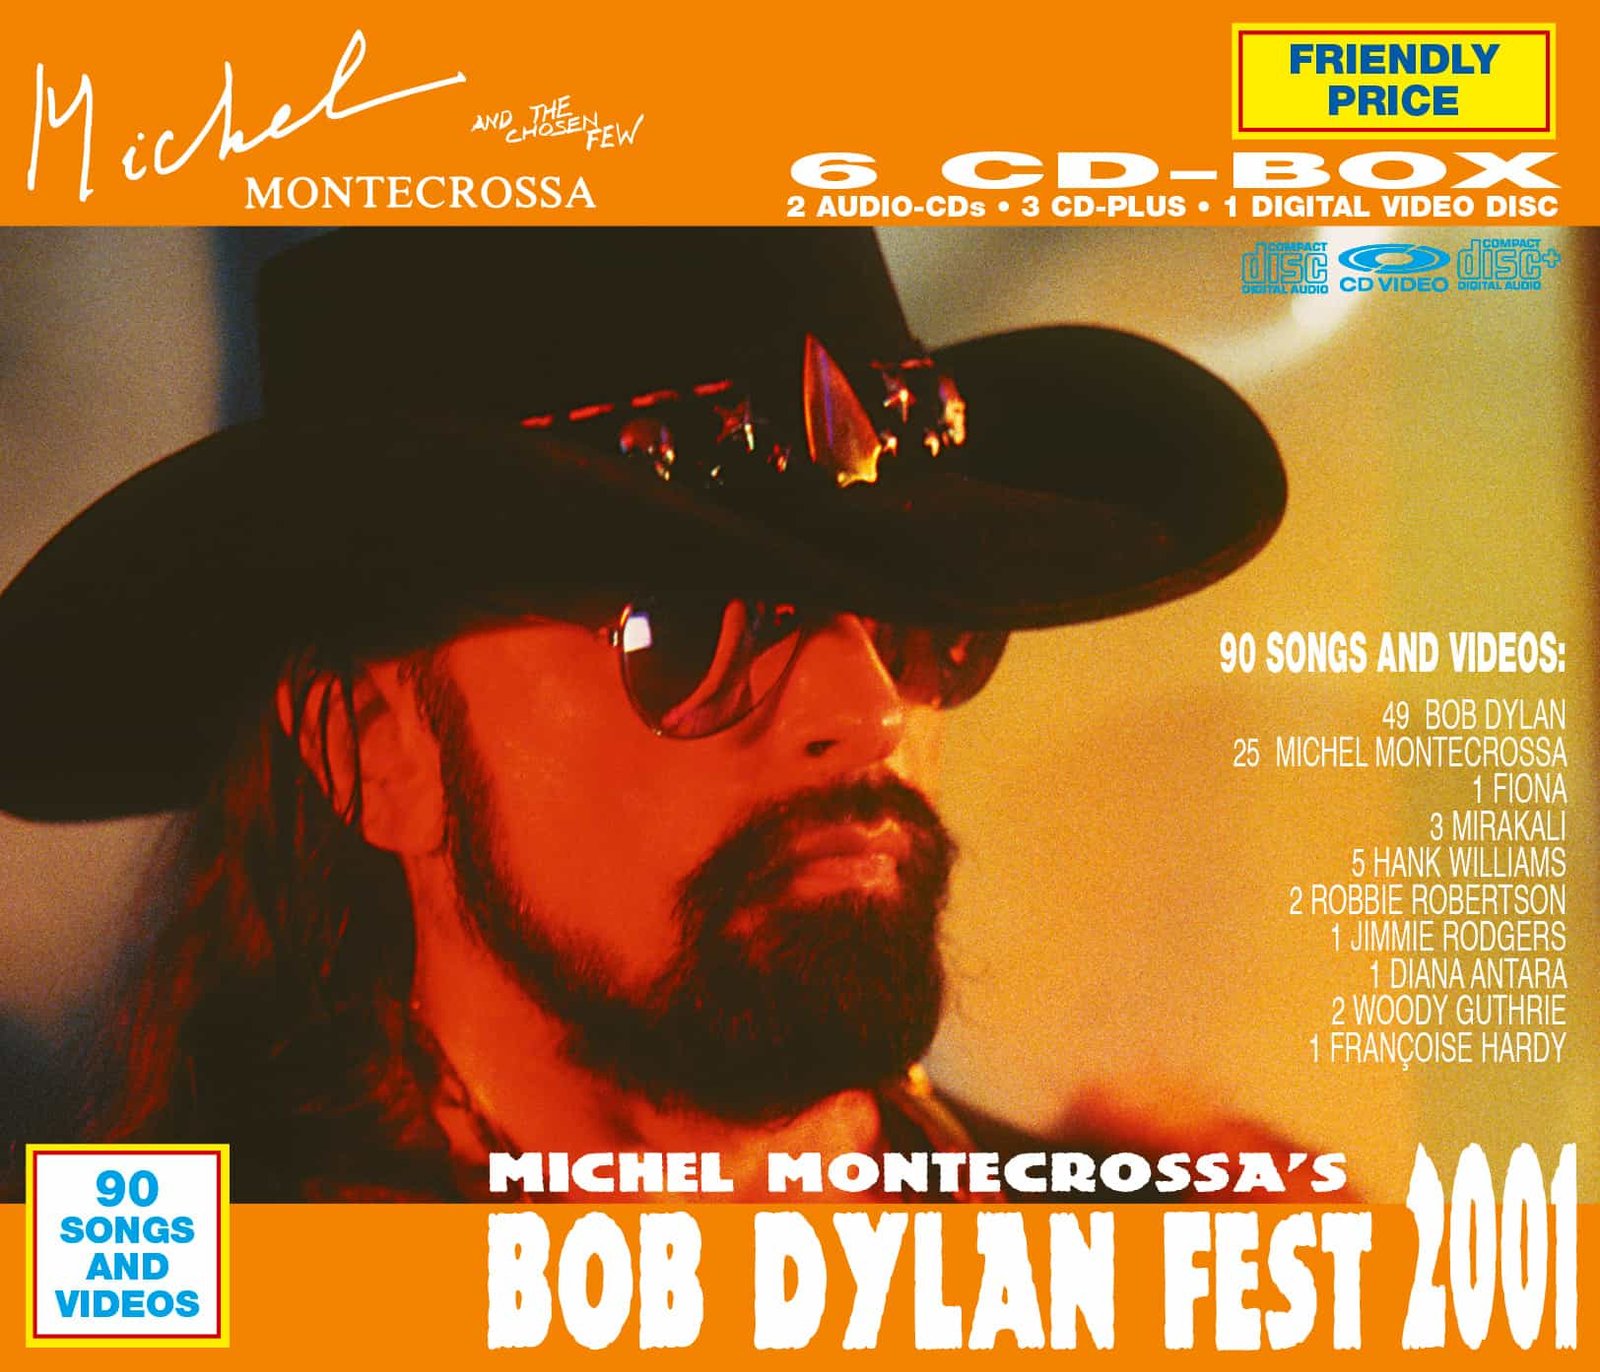 Michel Montecrossa’s Bob Dylan Fest 2001